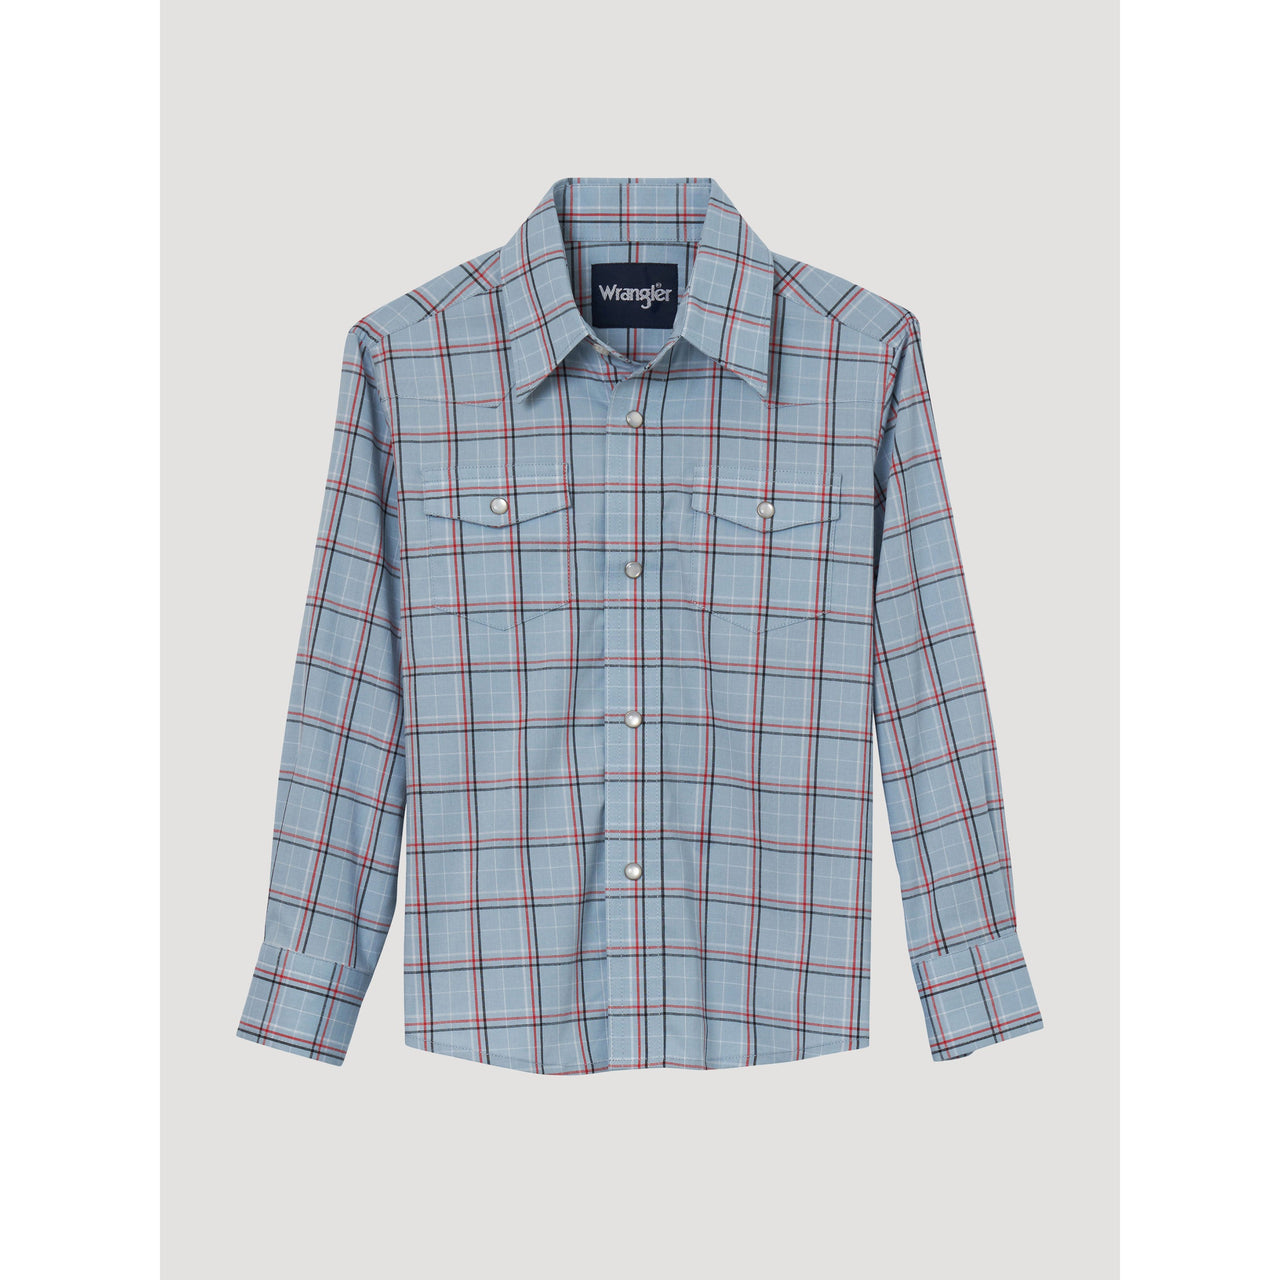 Wrangler Boy's Wrinkle Resistant Long Sleeve Plaid Shirt - Blue